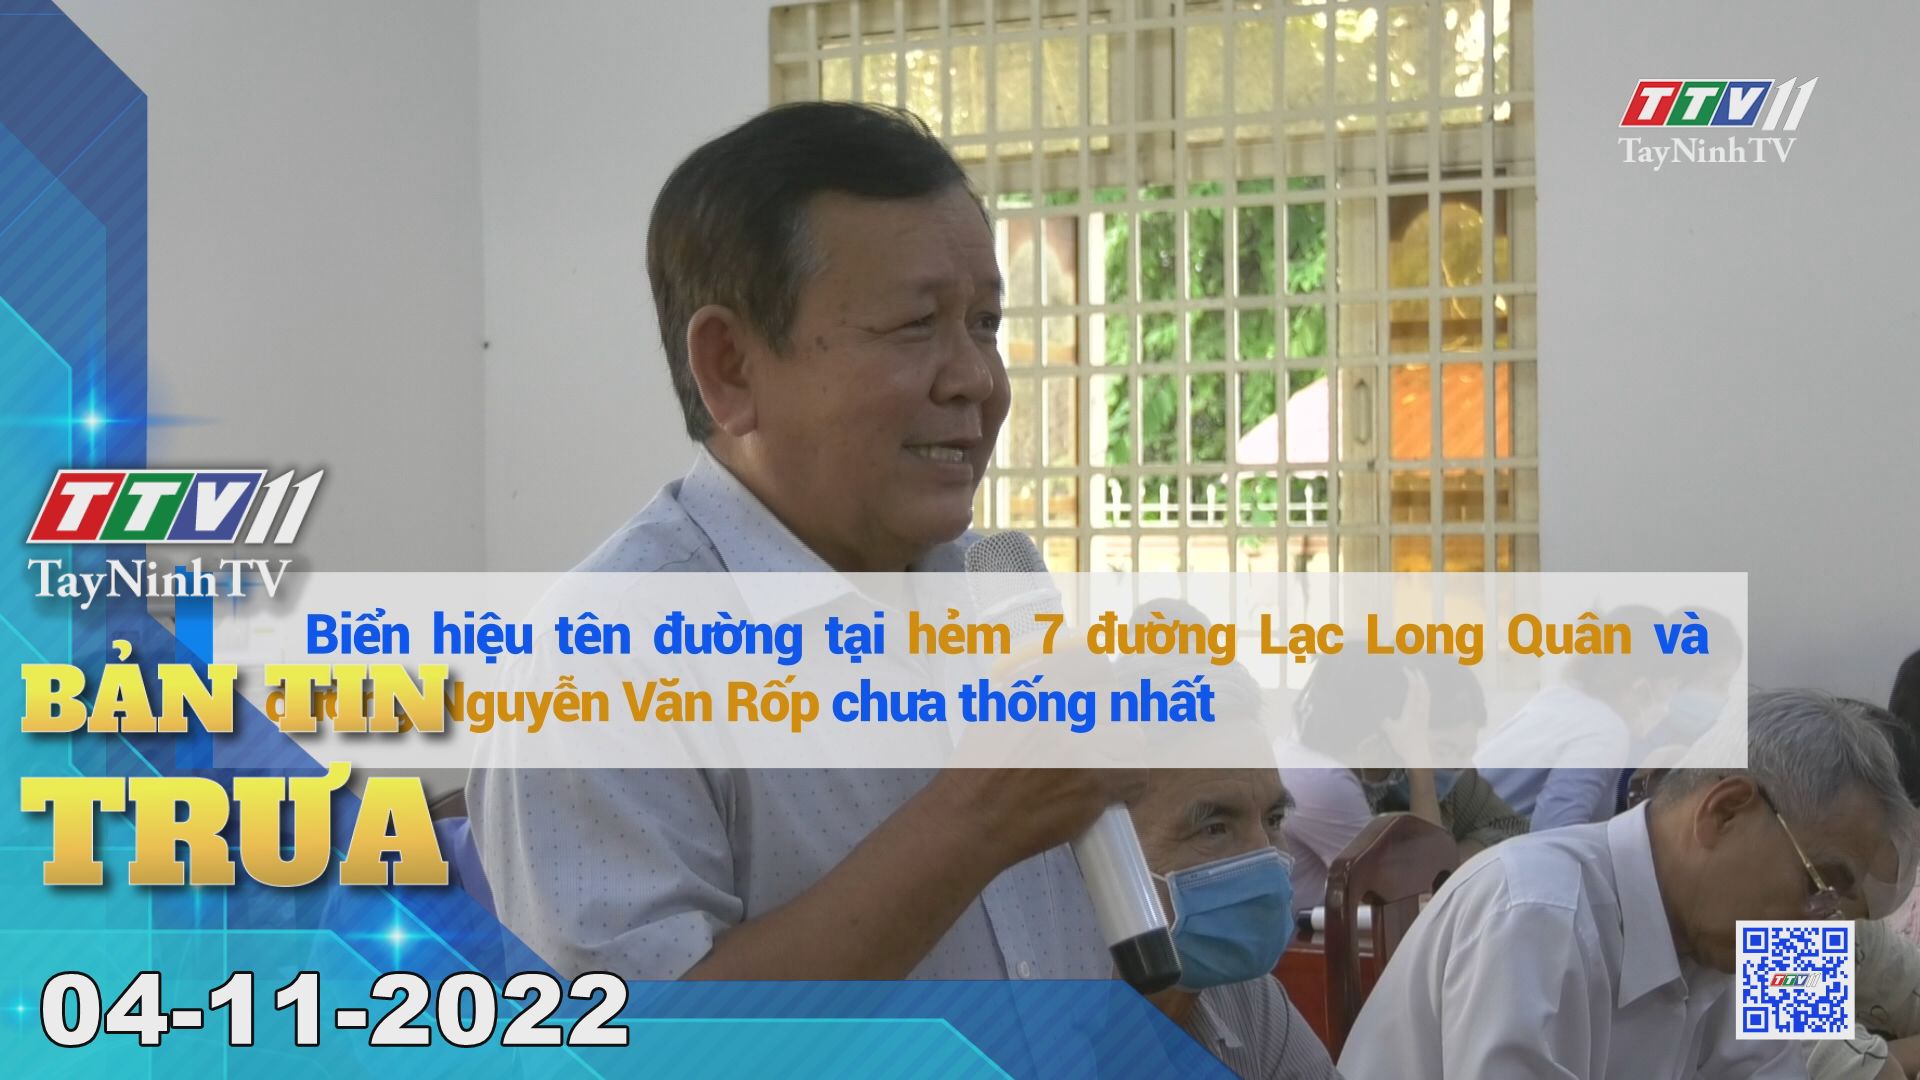 Bản tin trưa 04-11-2022 | Tin tức hôm nay | TayNinhTV